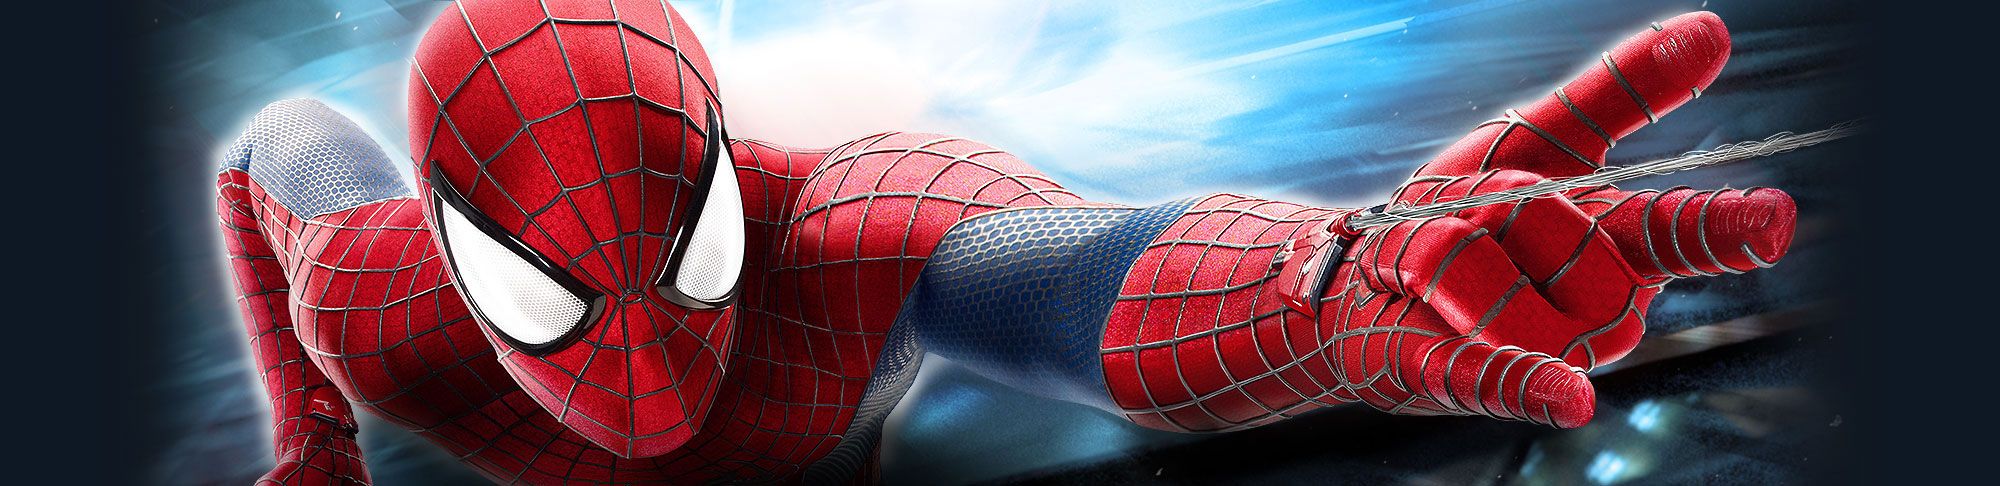 The Amazing Spider Man 2 Video Game Promo Promo Art 2